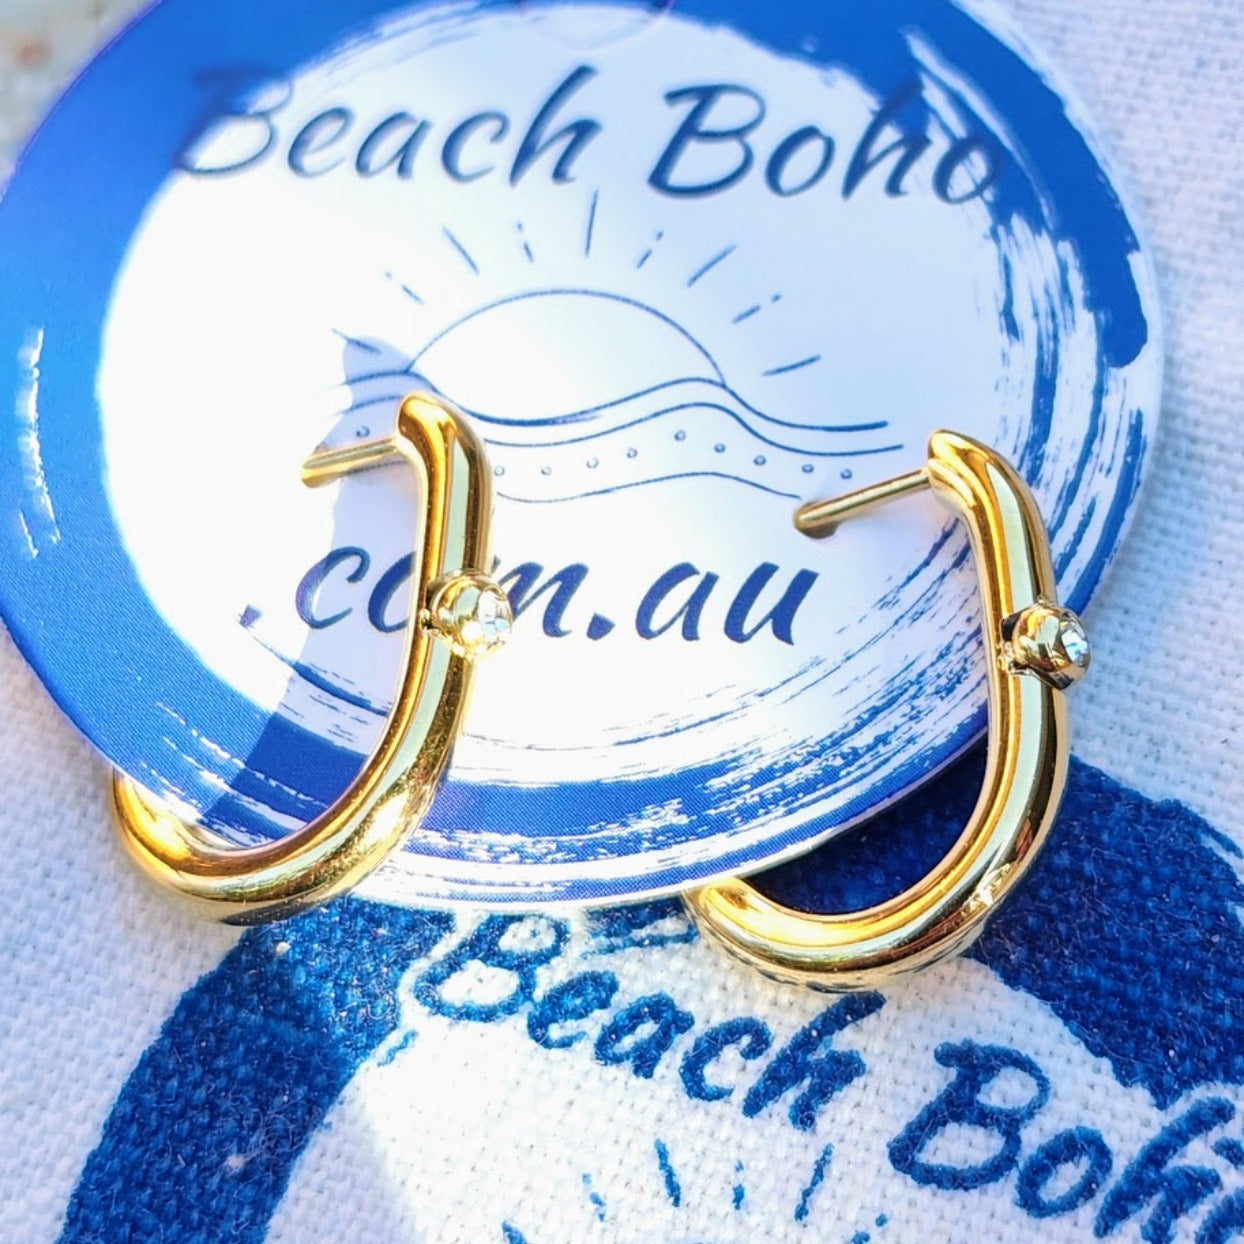 BELLA HUGGIES -  GOLD WATERPROOF CUBIC ZIRCONIA EARRINGS - Premium earrings from www.beachboho.com.au - Just $49! Shop now at www.beachboho.com.au